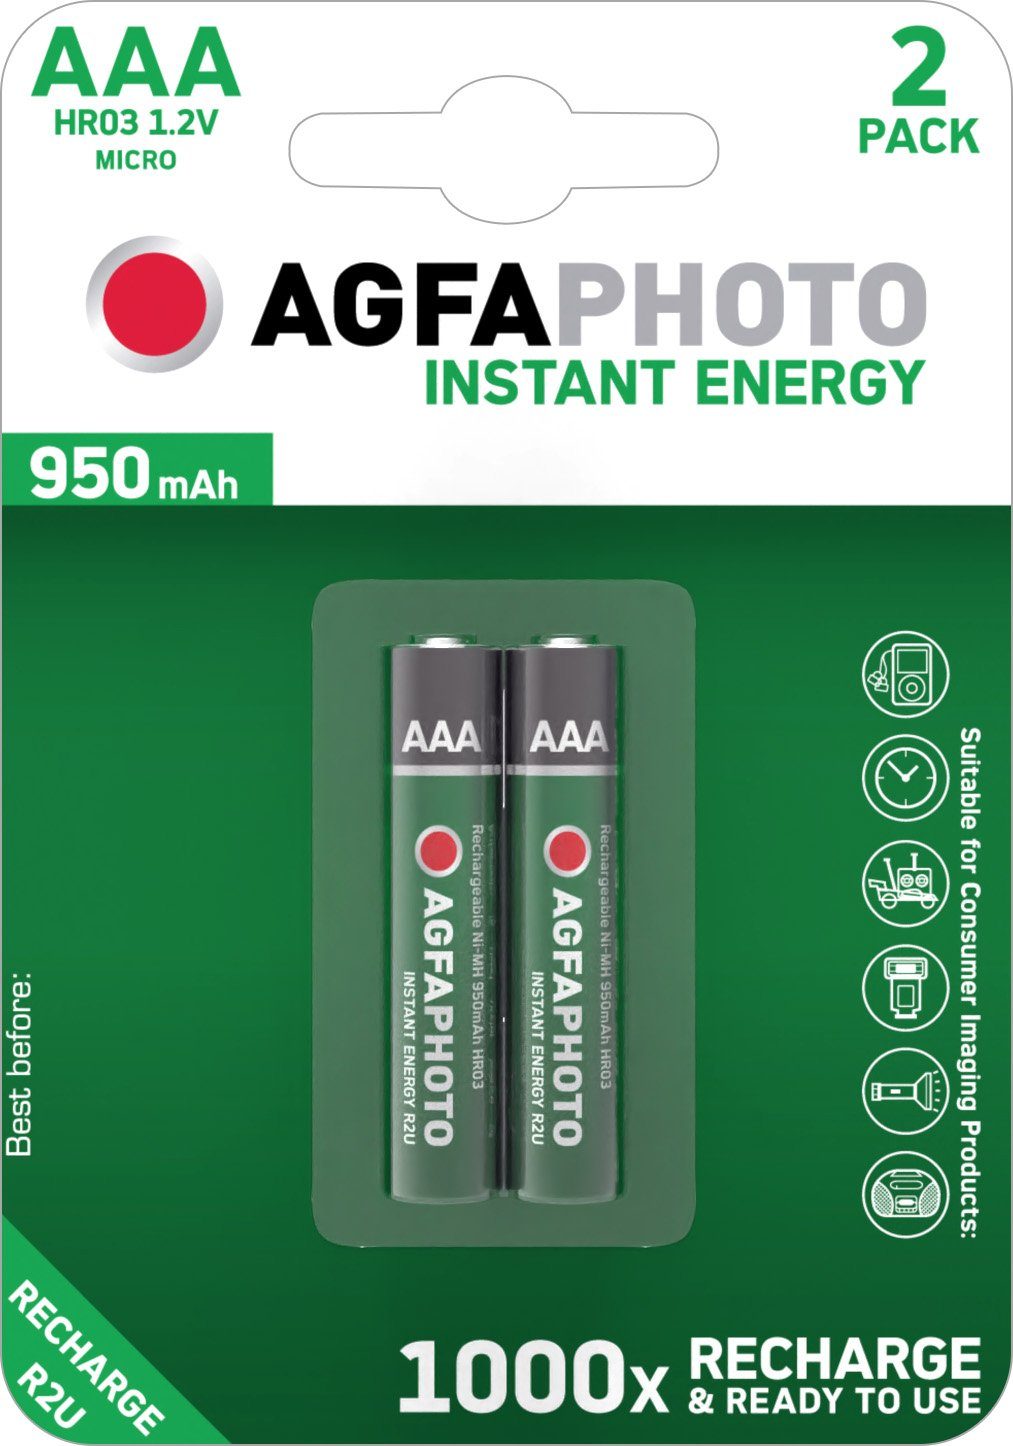 [Jetzt im Angebot! Nicht verpassen] AgfaPhoto Instant Energy Micro/AAA/HR03 Akku 1.2V/950mAh (2 St), Micro